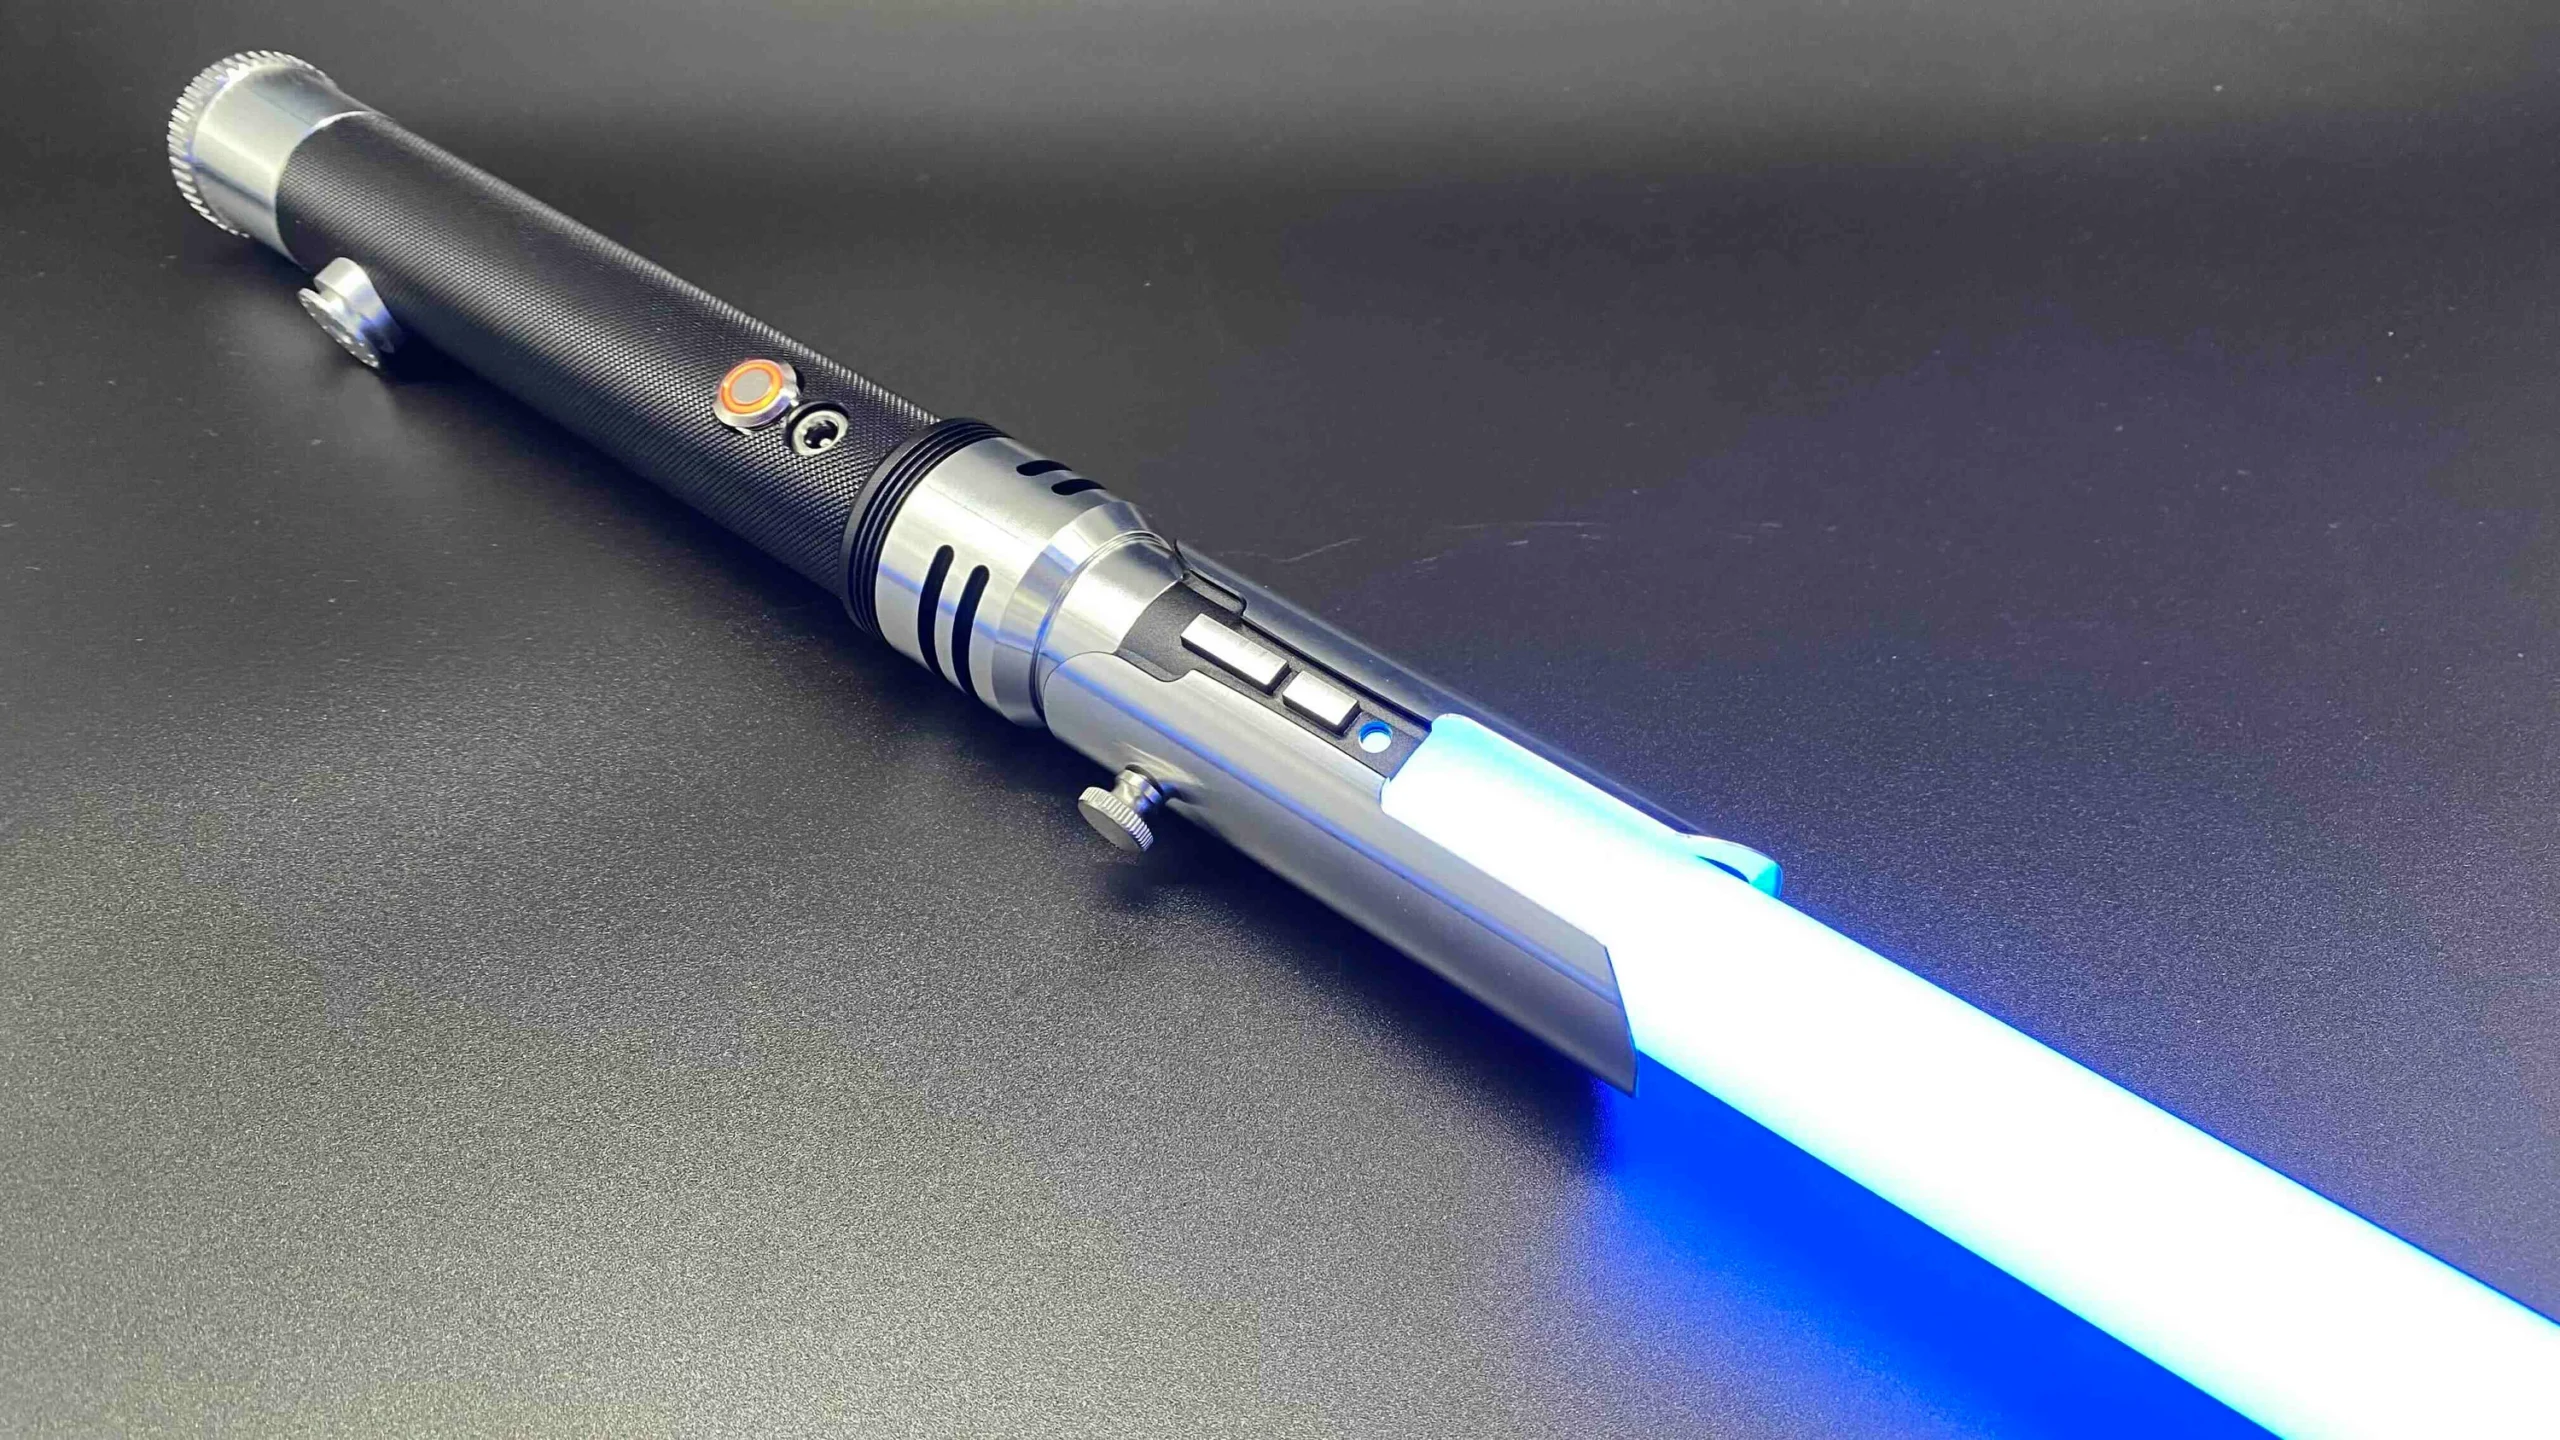 Replica Lightsabers for Sale - A Star Wars Fan's Dream Come True